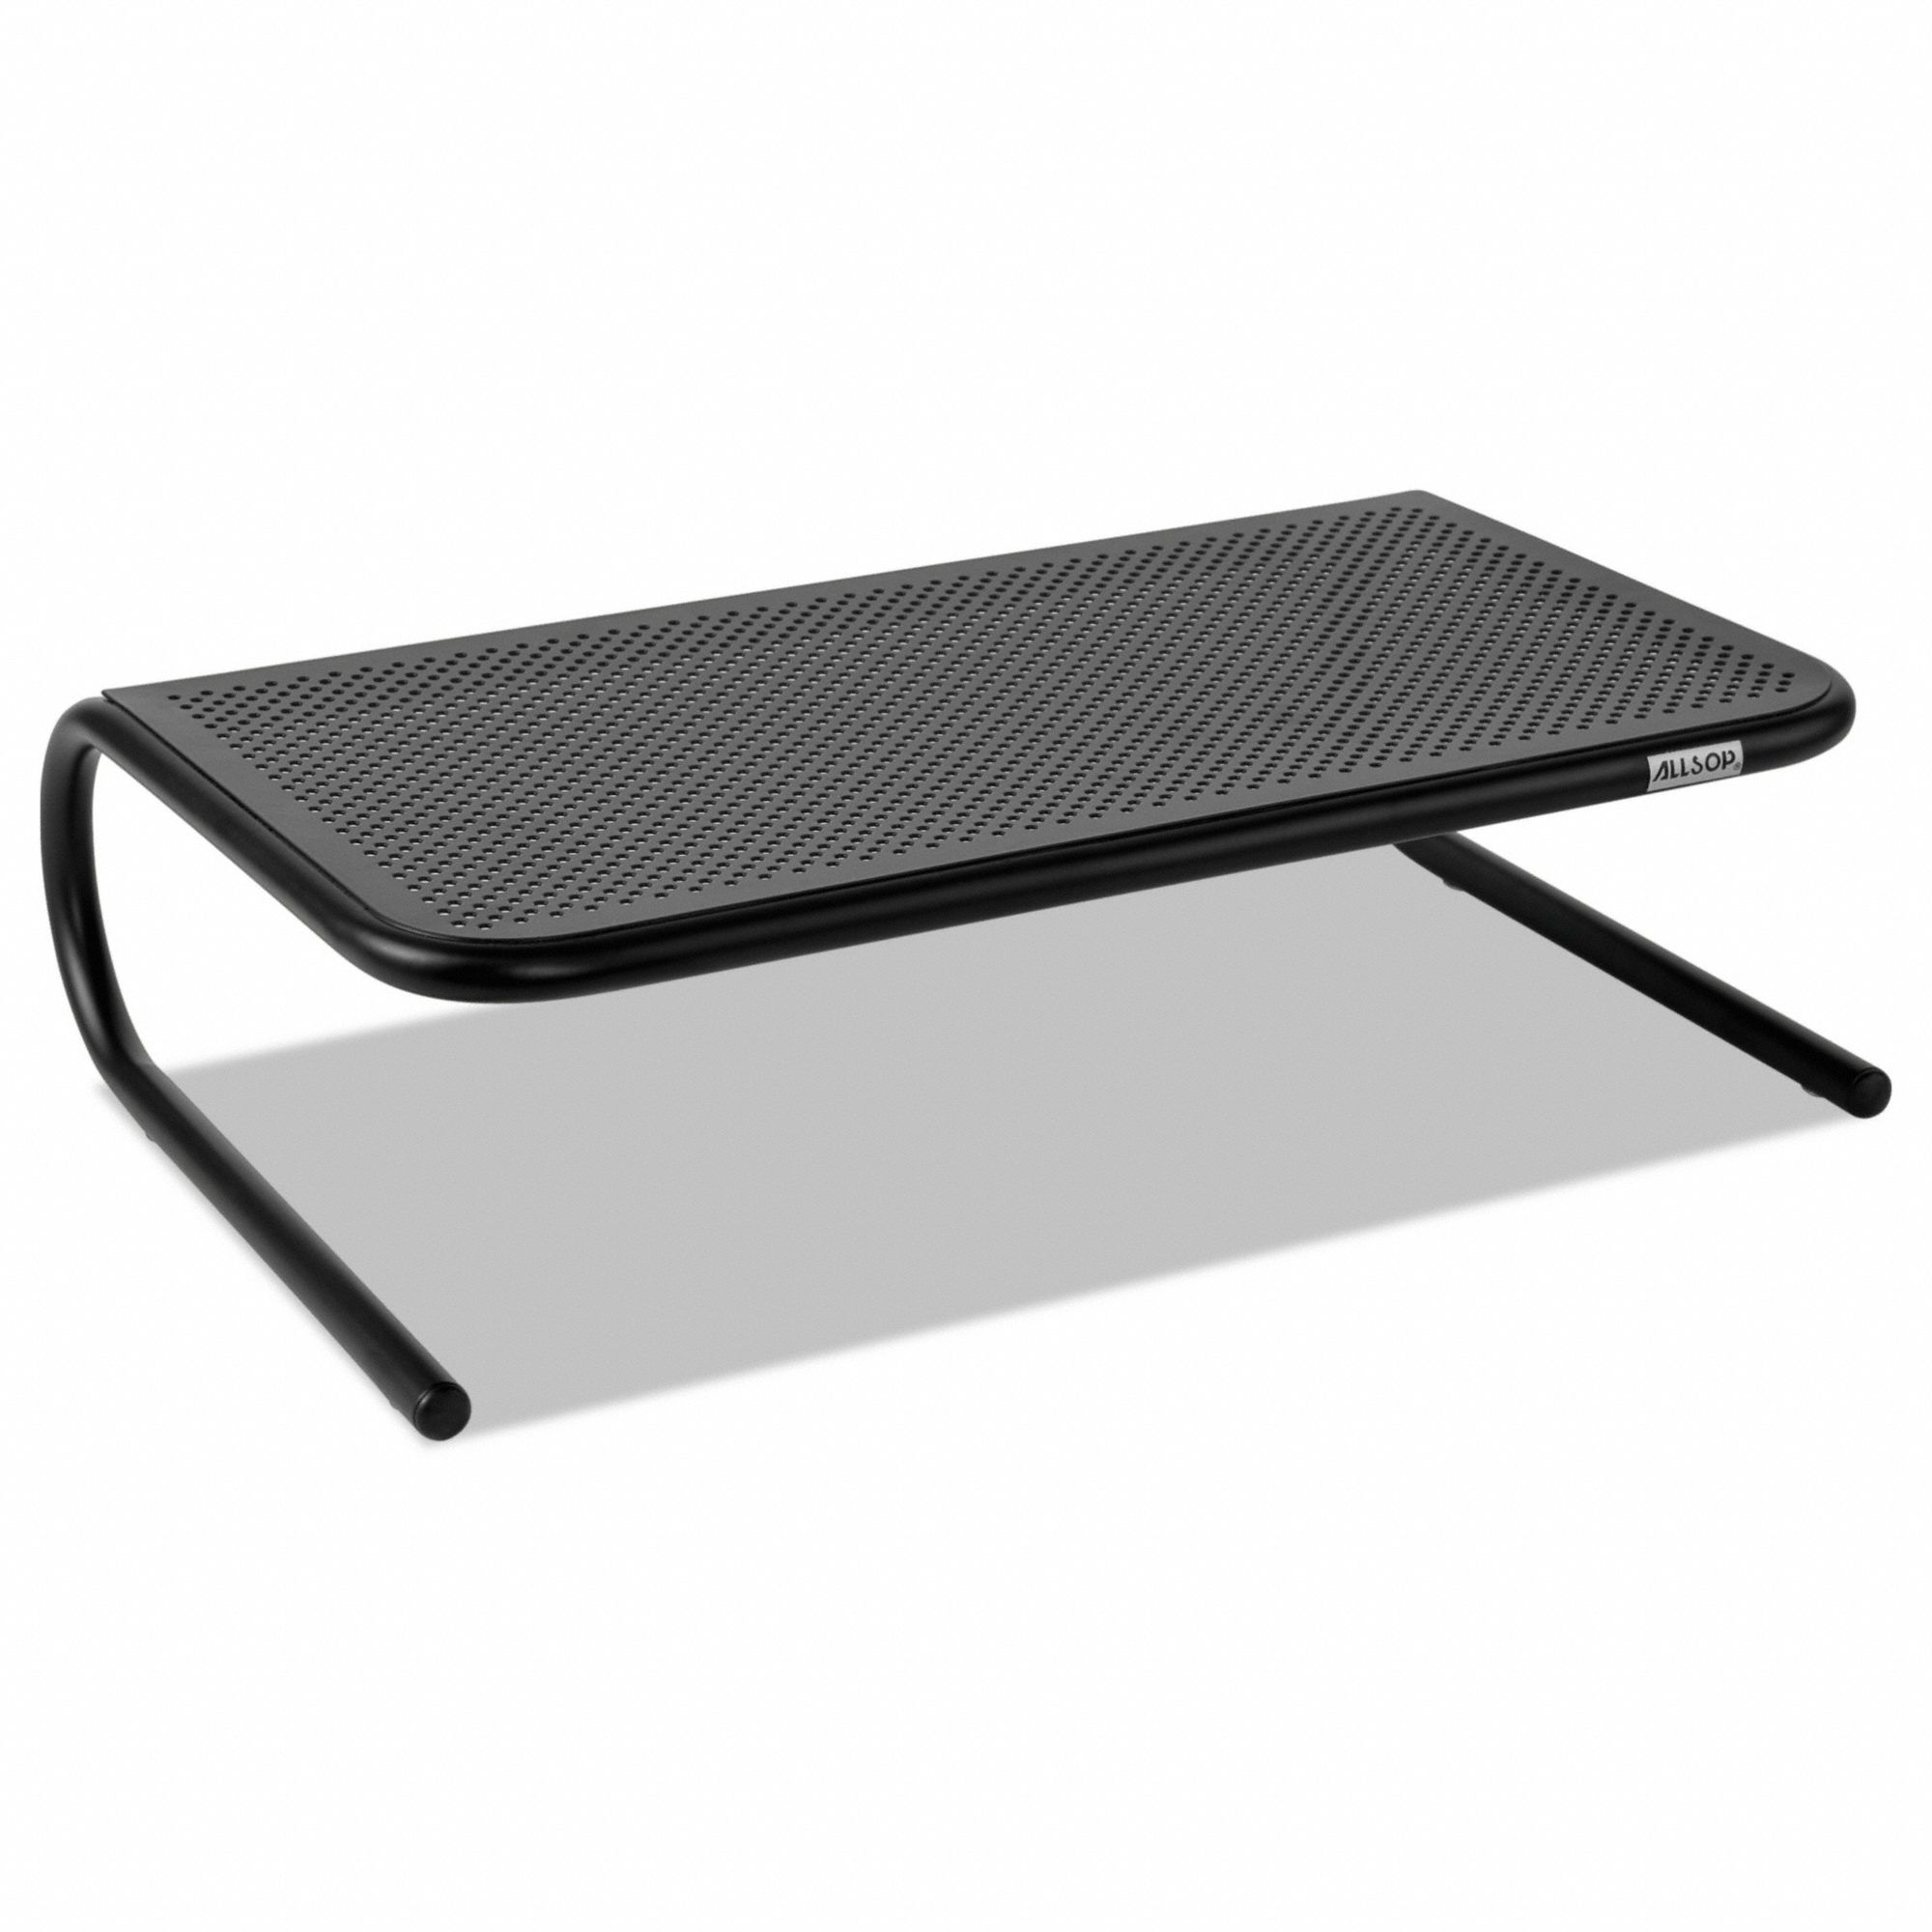 Monitor Stand: Steel, Black, 30 lb Wt Capacity